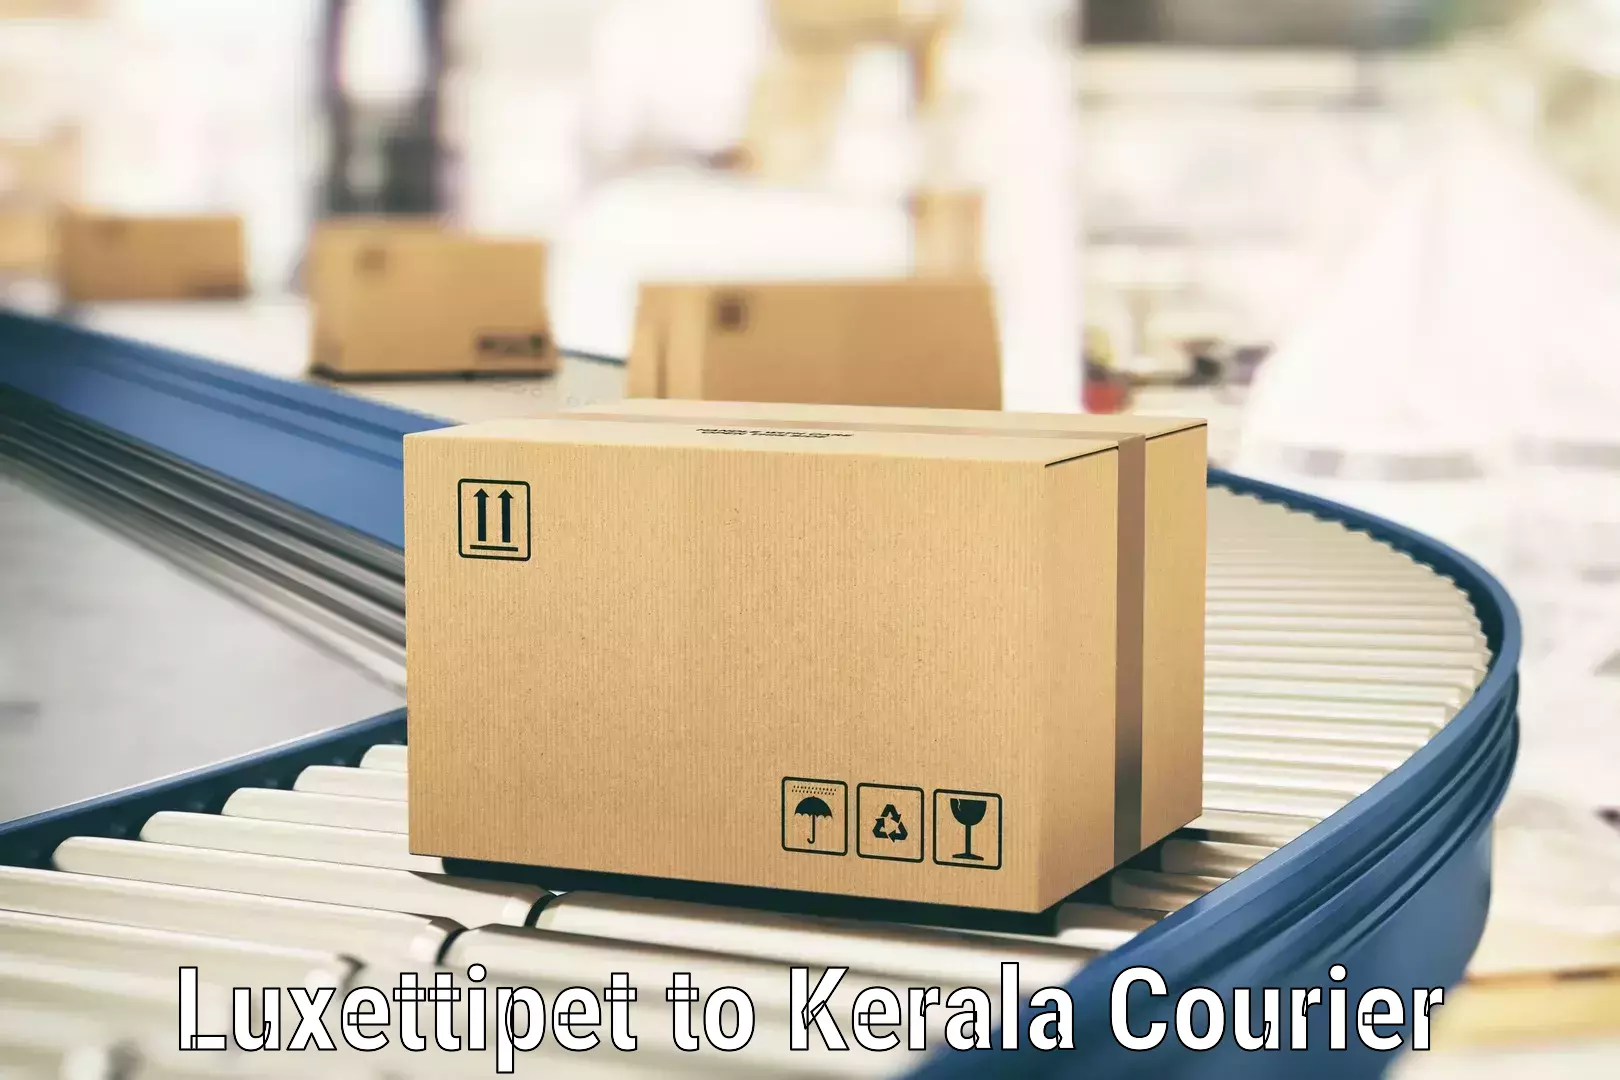 Fragile item shipping in Luxettipet to Tirurangadi